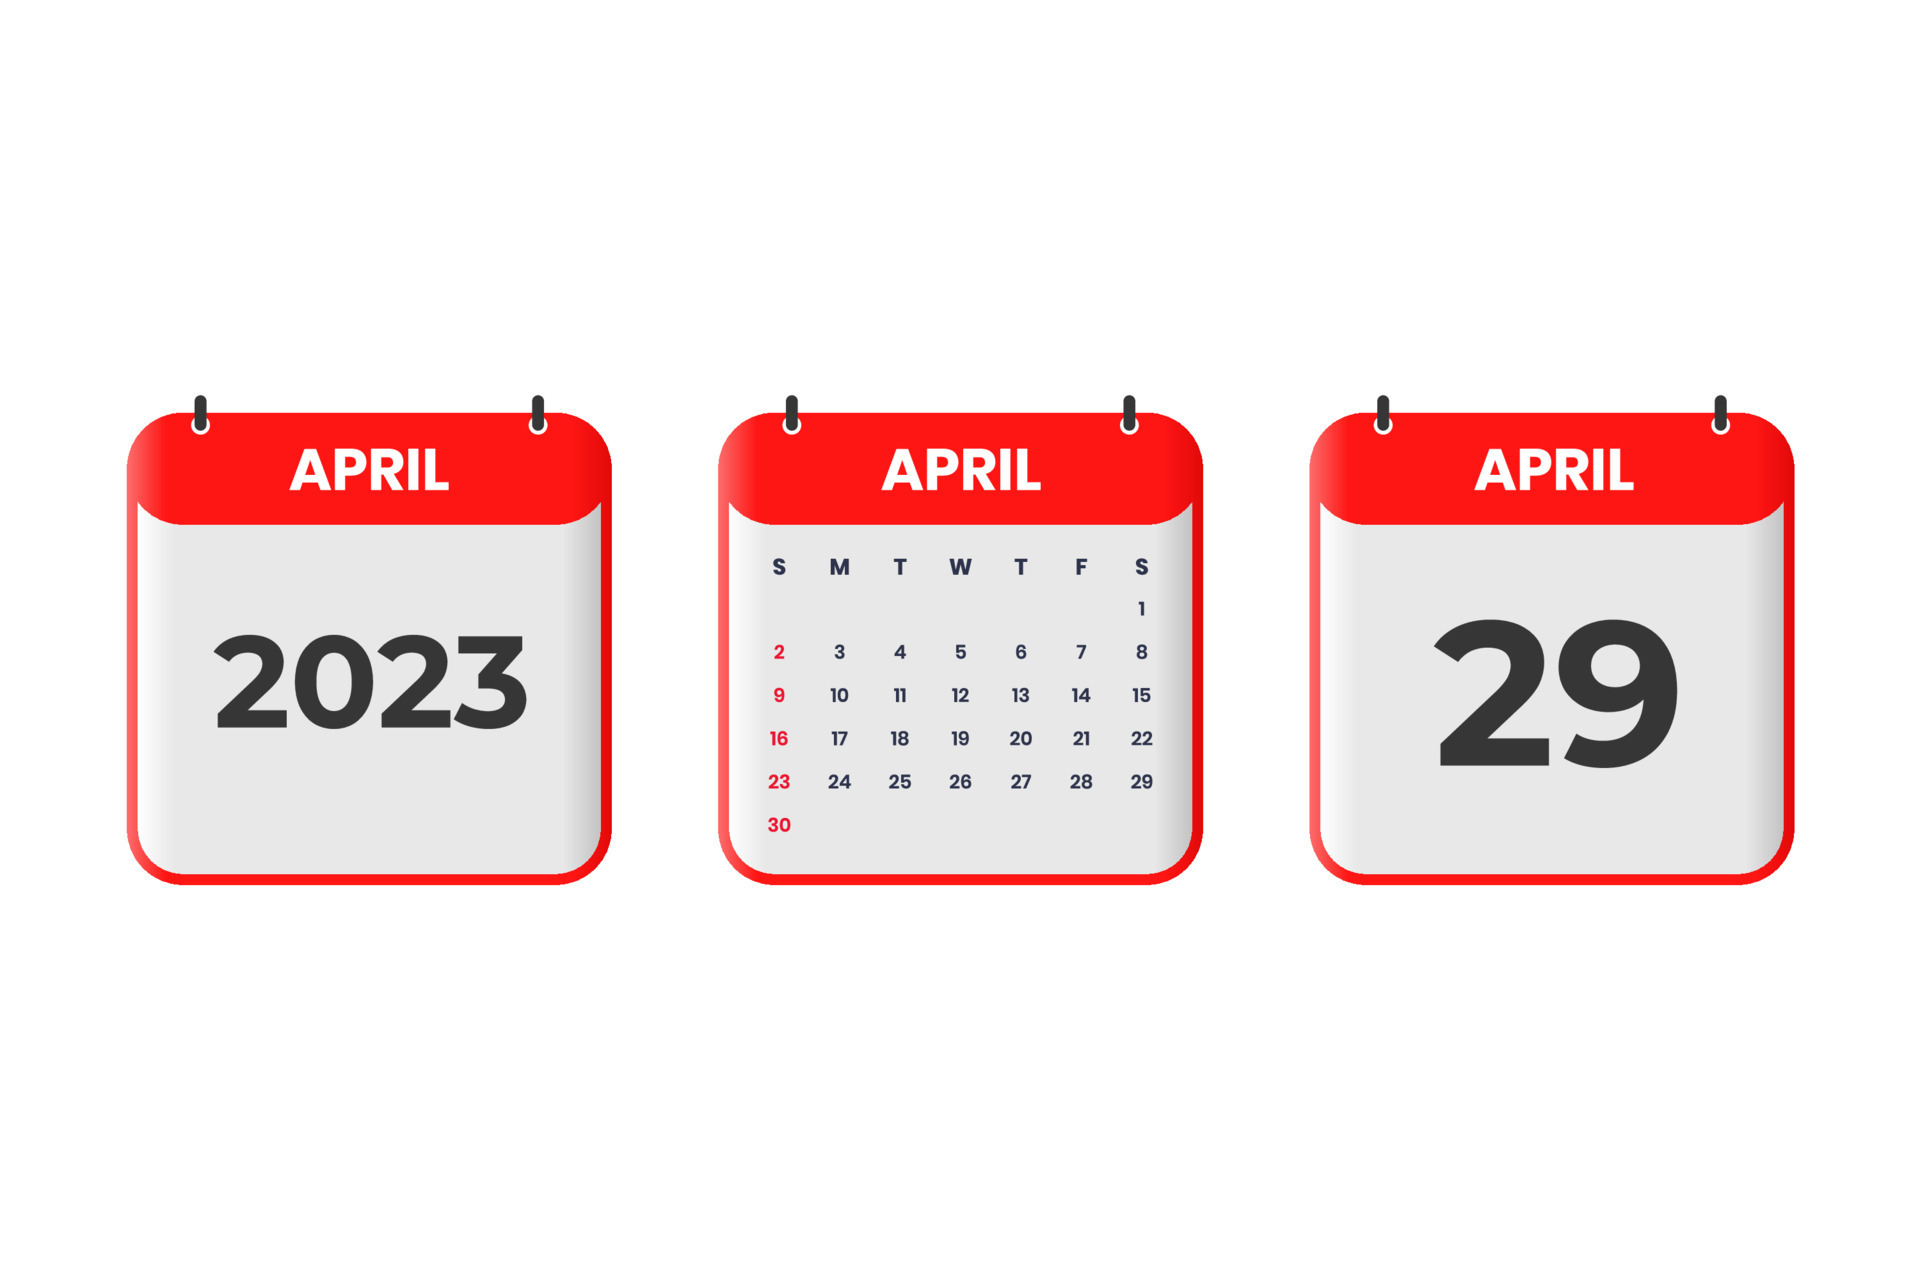 April 2023 calendar design. 29th April 2023 calendar icon for schedule